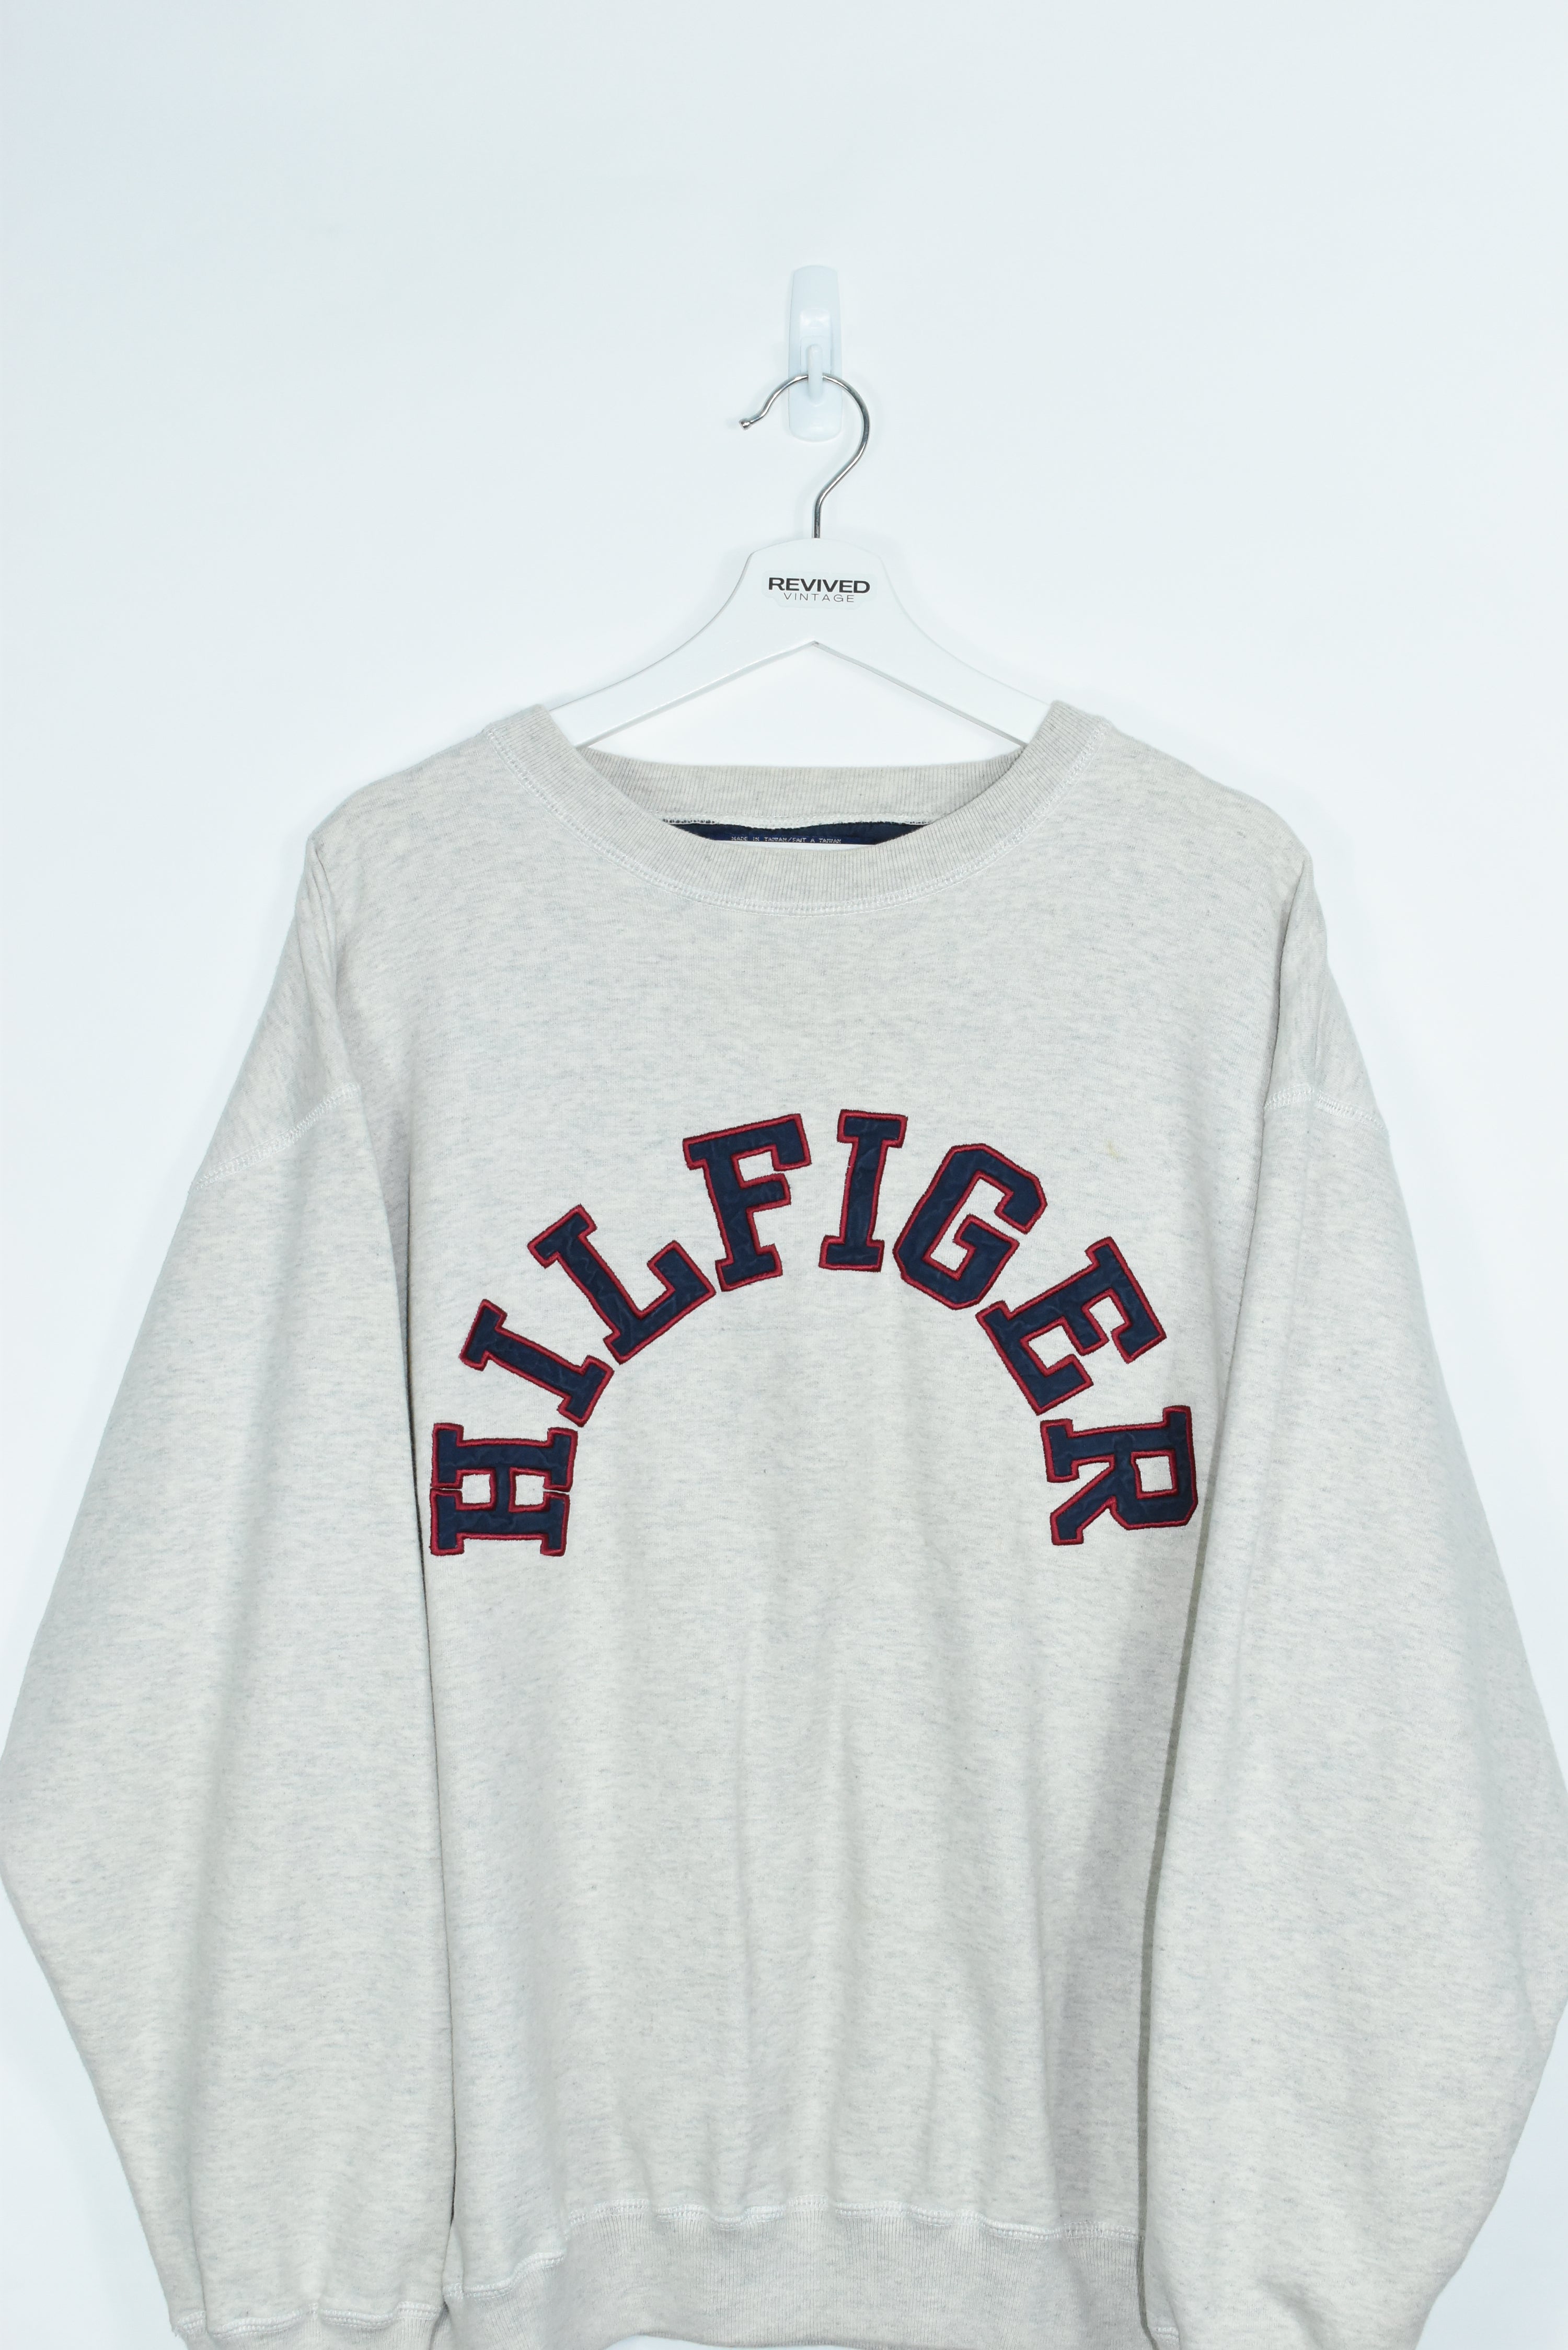 Vintage Tommy Hilfiger Embroidery Sweatshirt XLARGE